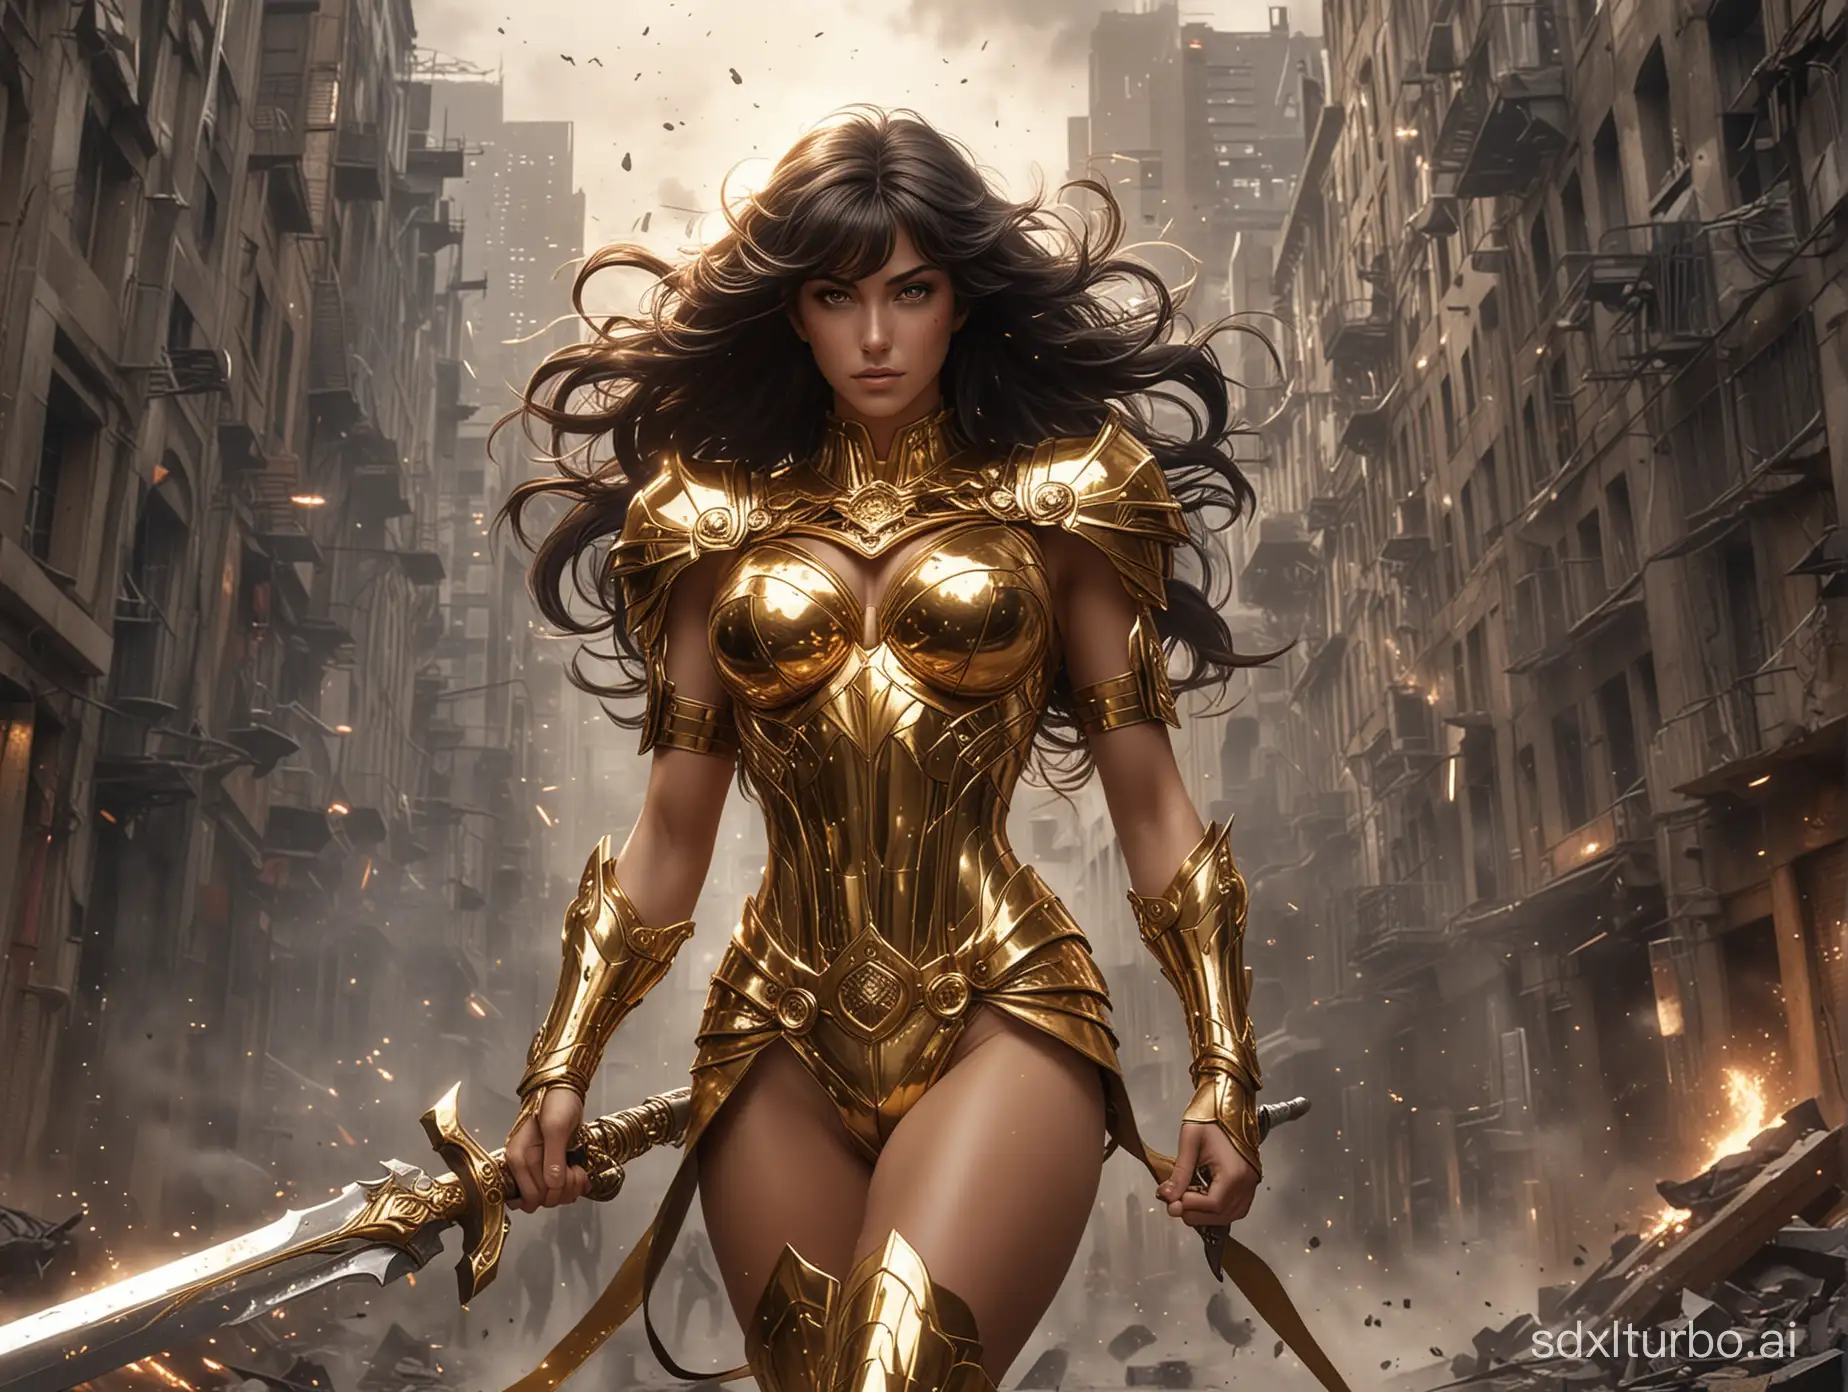 Futuristic-Mythical-Warrior-Princess-in-Golden-Armor-Amidst-Destruction